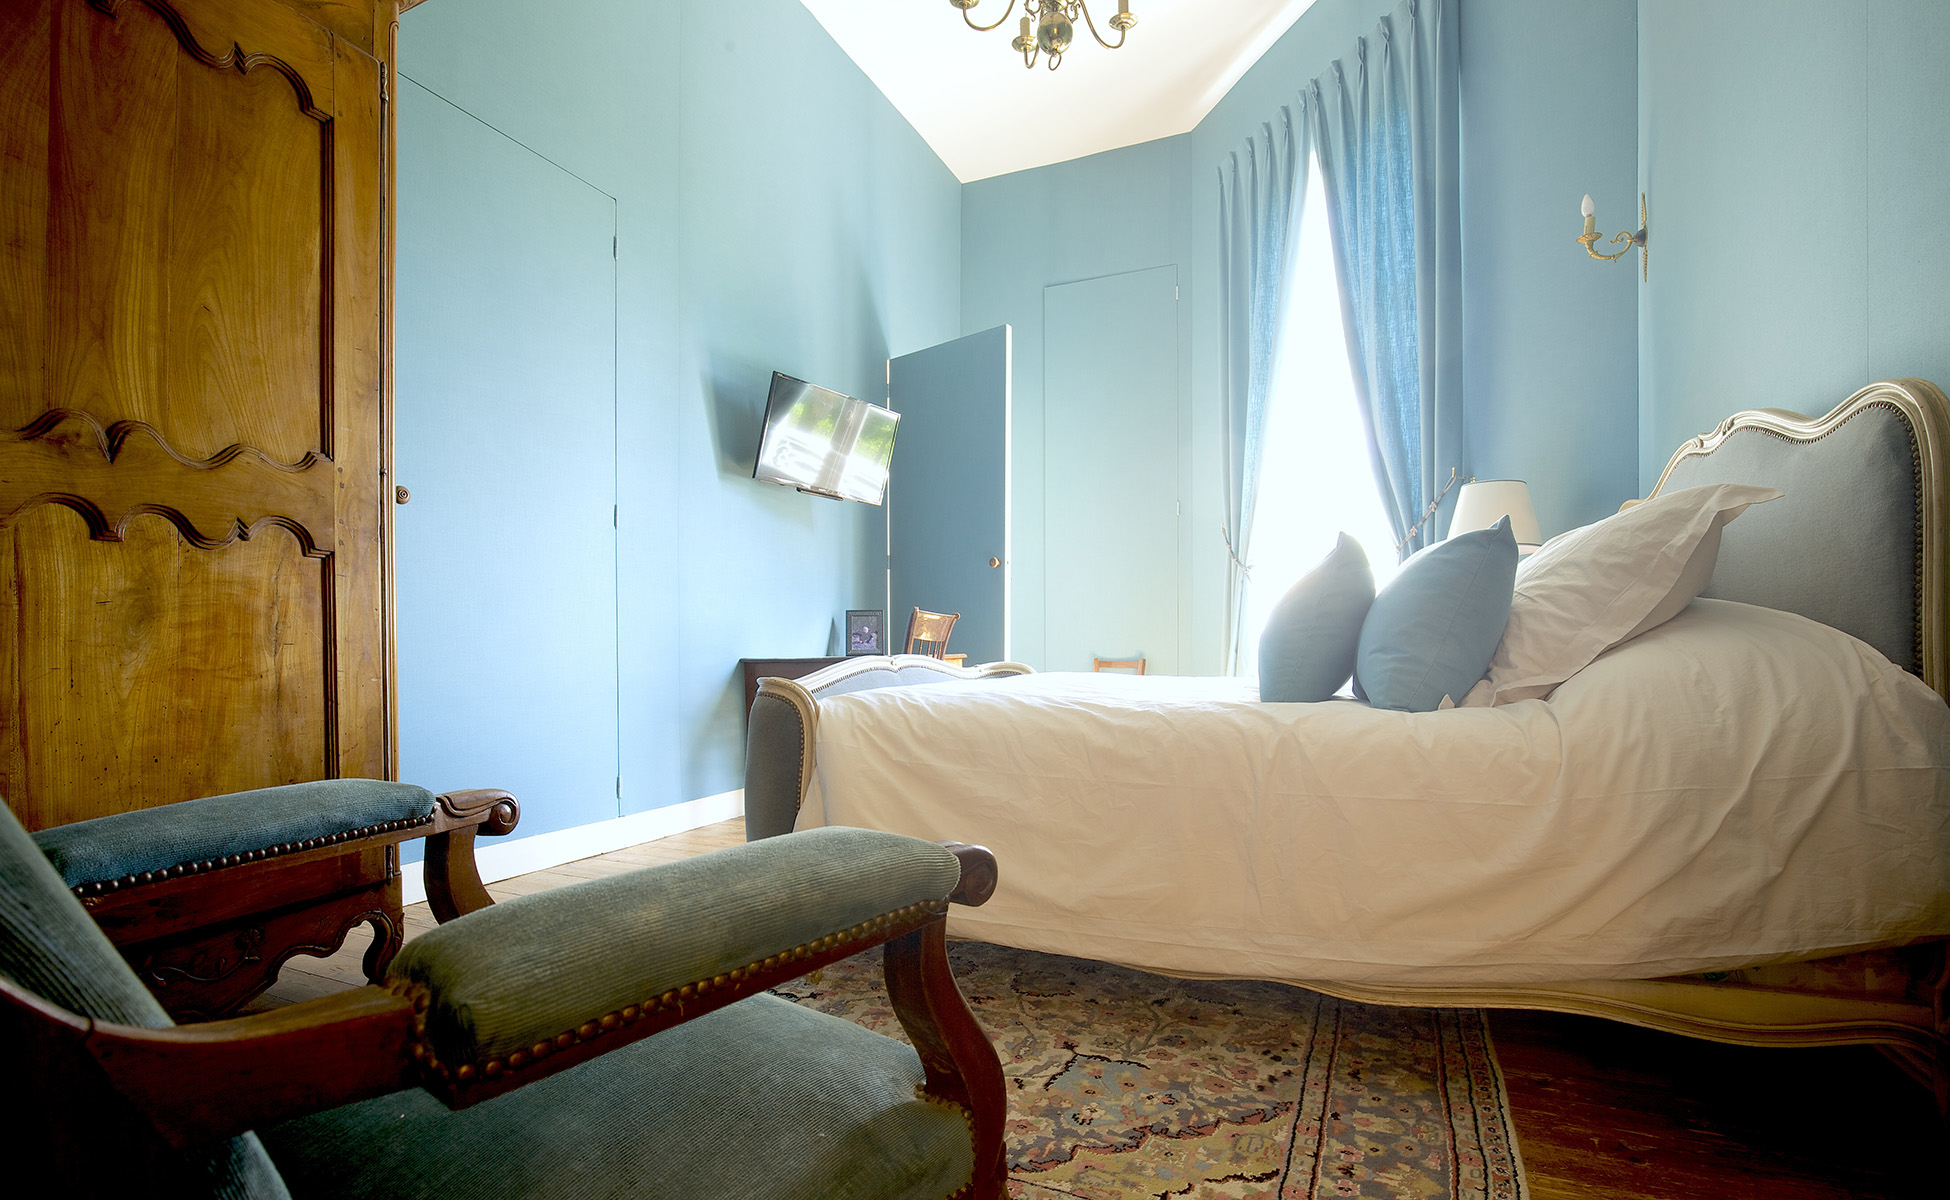 Lovelydays luxury service apartment rental - Libourne - Chateau de JUNAYME - Lovelysuite - 7 bedrooms - 6 bathrooms - Queen bed - 6a36a6d1e6cb - Lovelydays